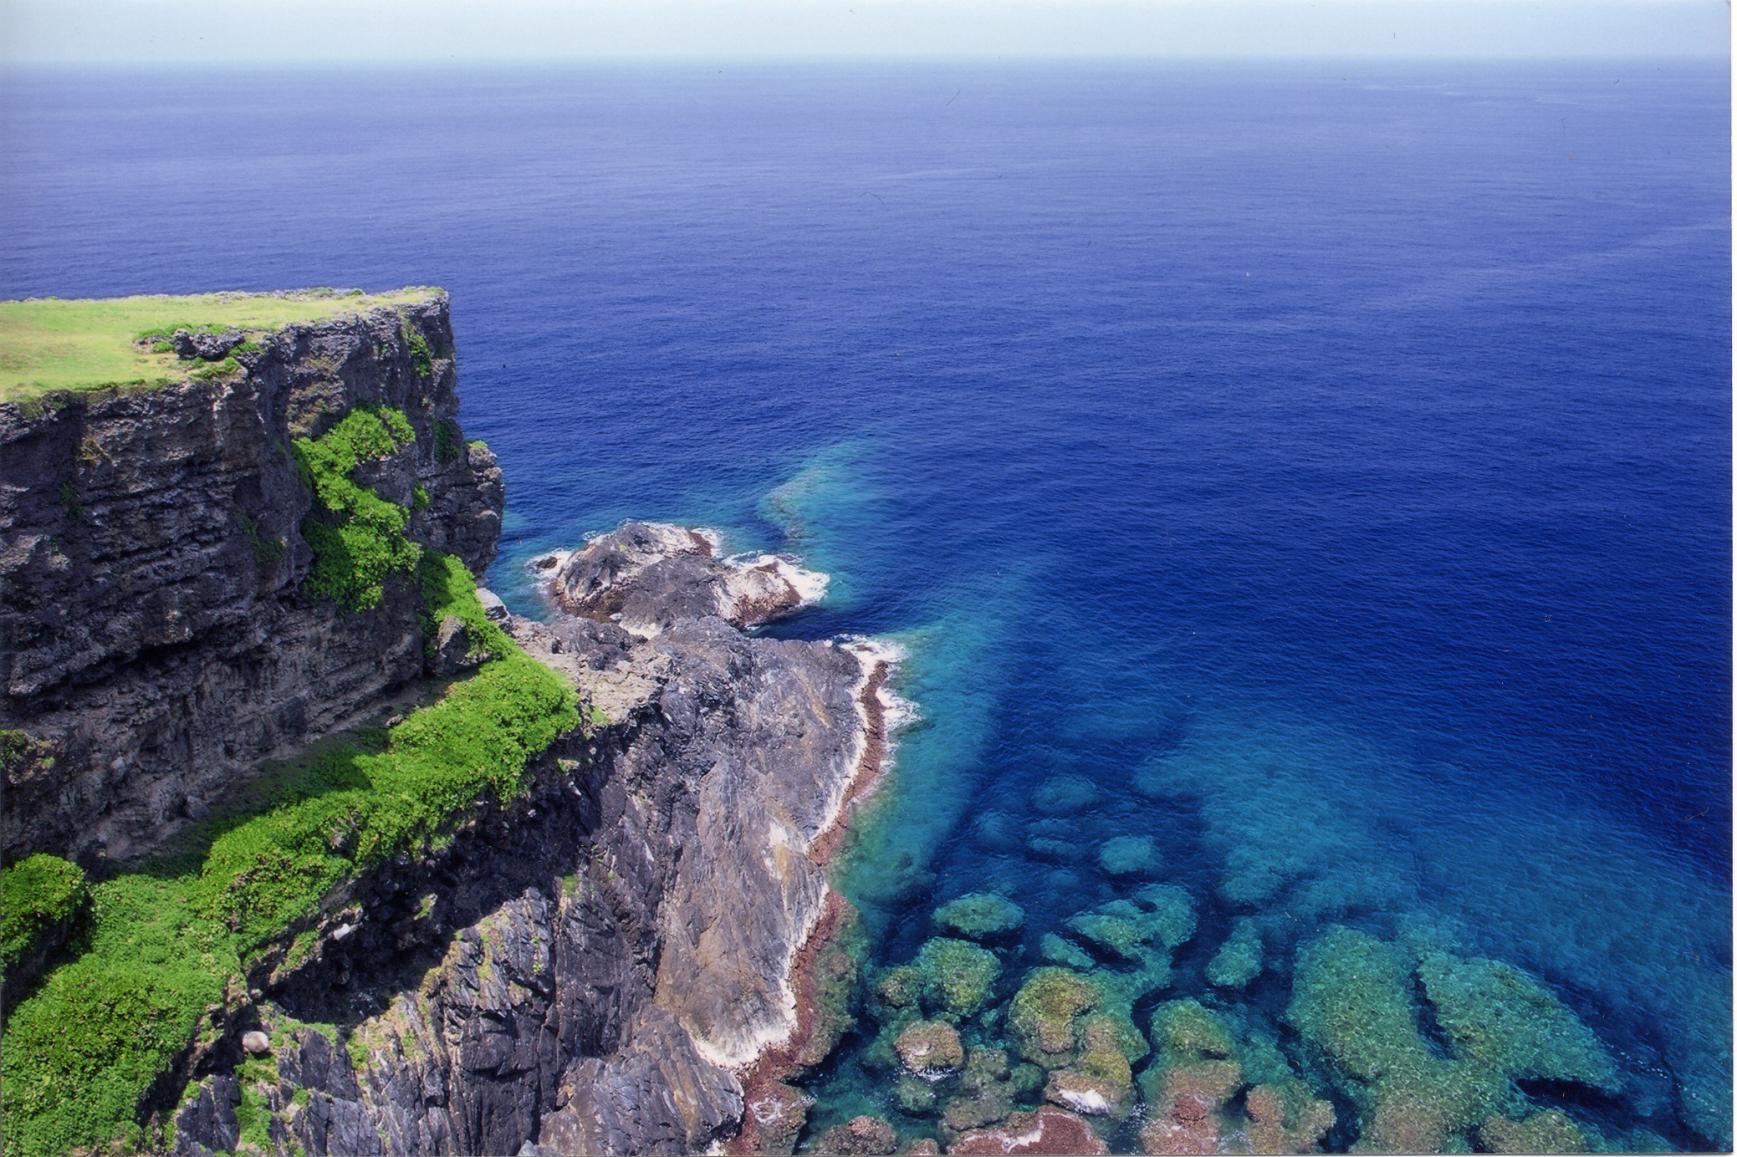 An island of flowers and limestone caverns: the Okinoerabujima Route-1